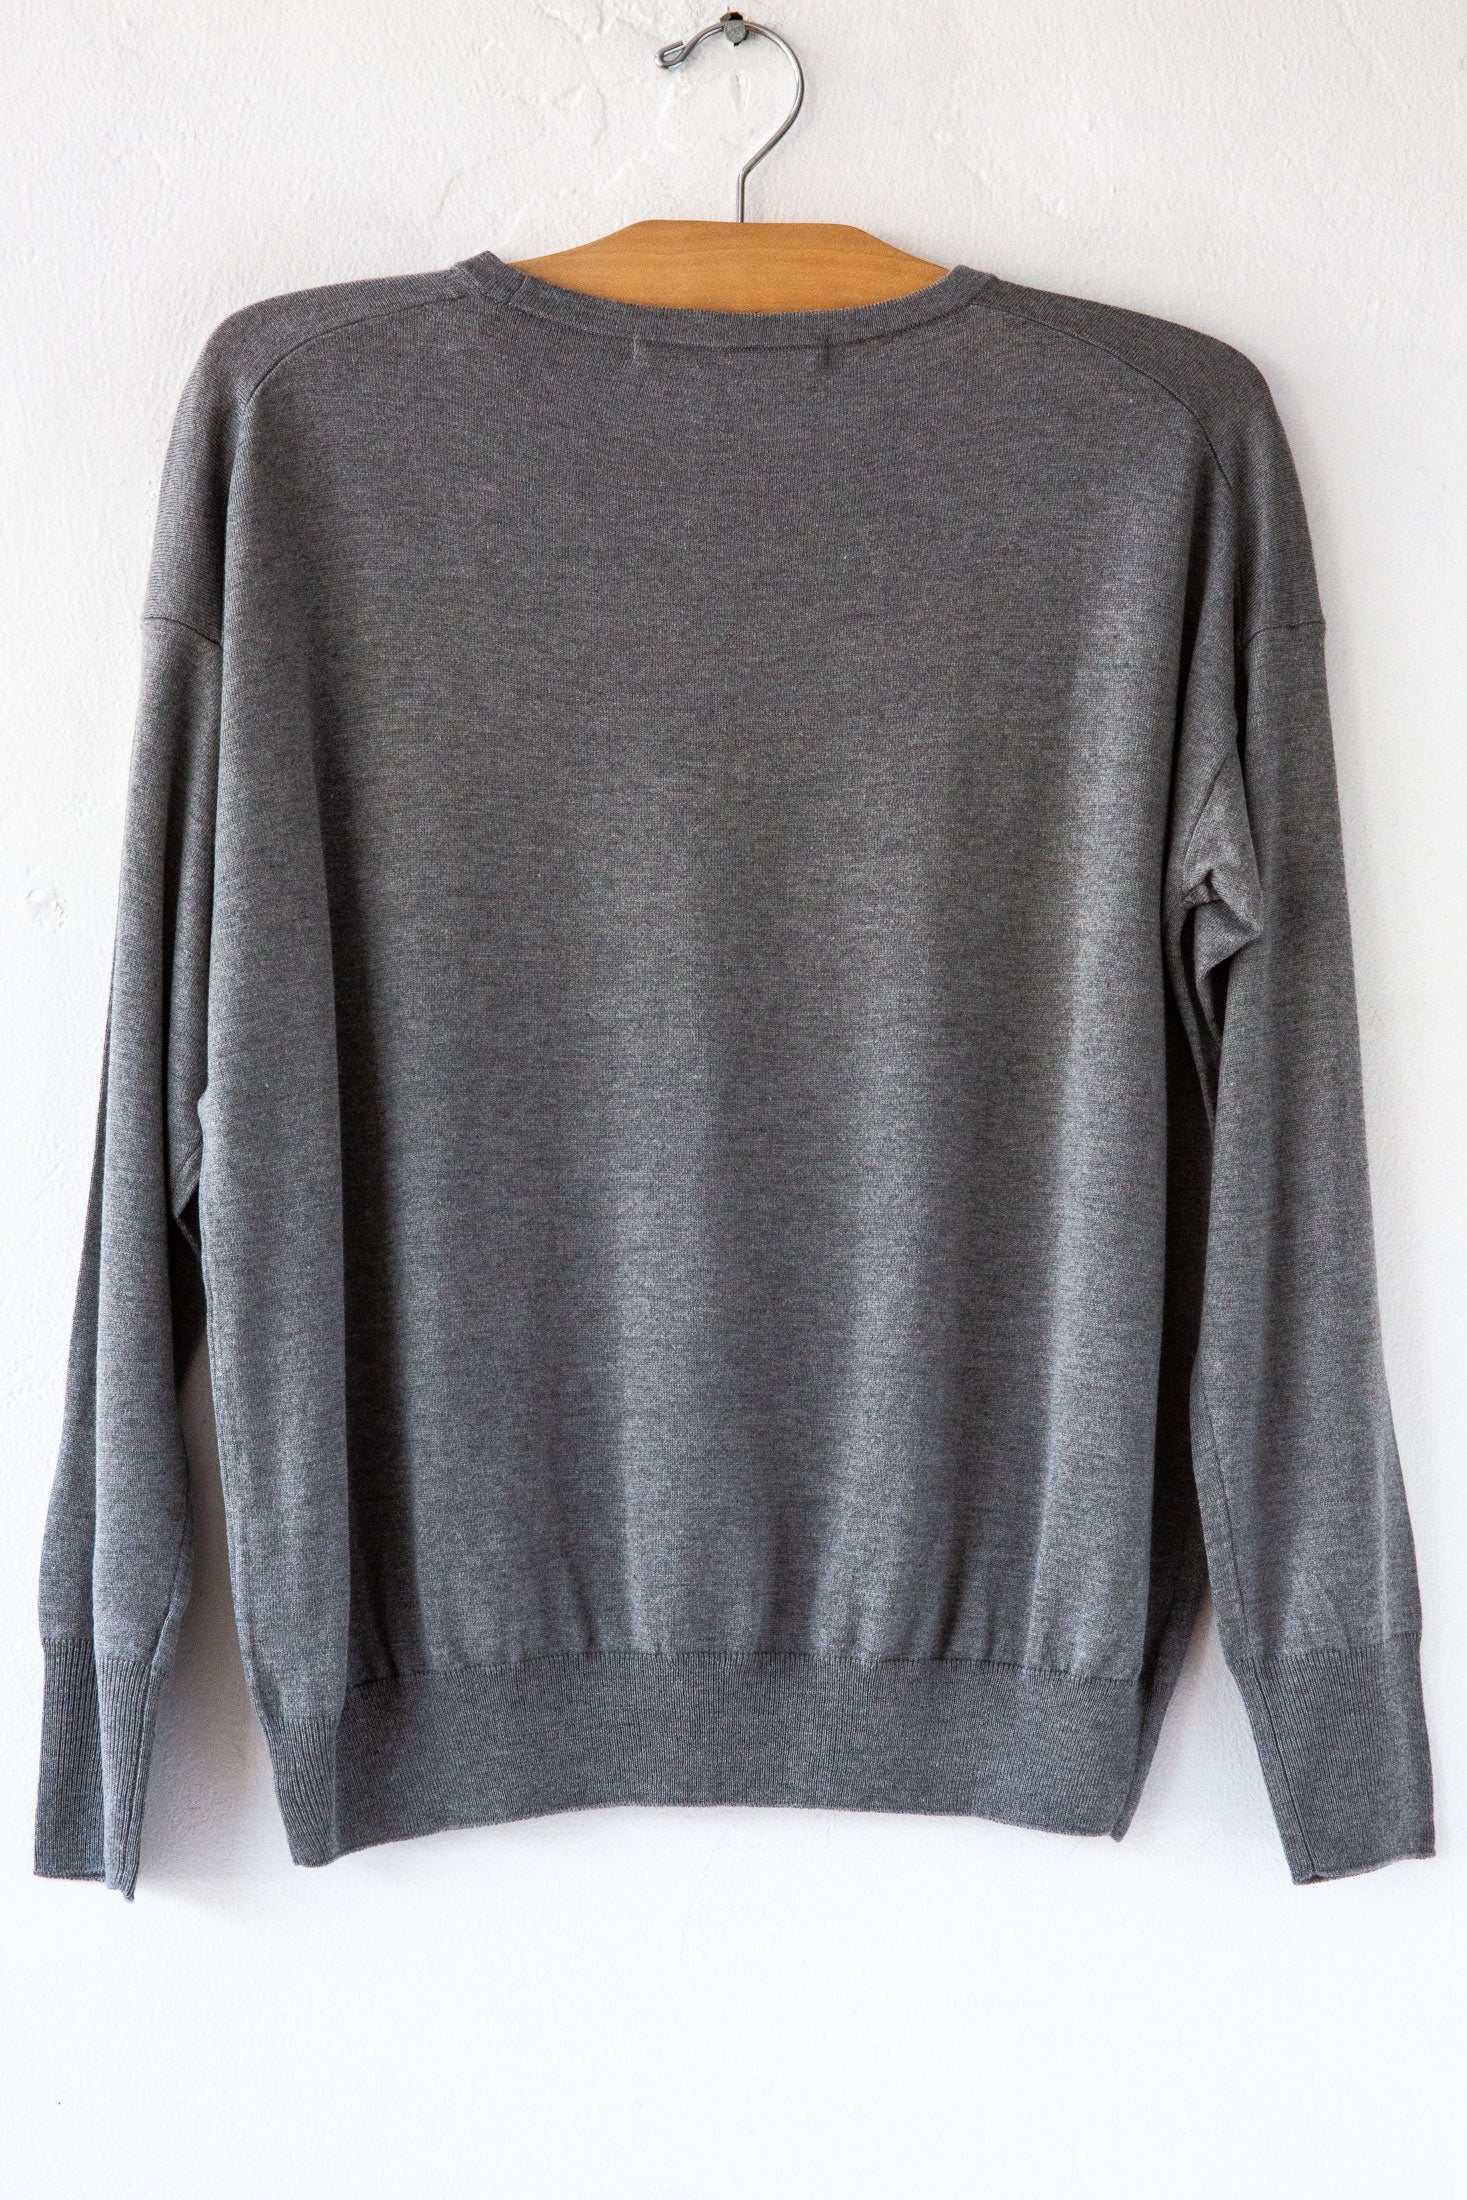 Silk/Cashmere Grey Crew Sweater